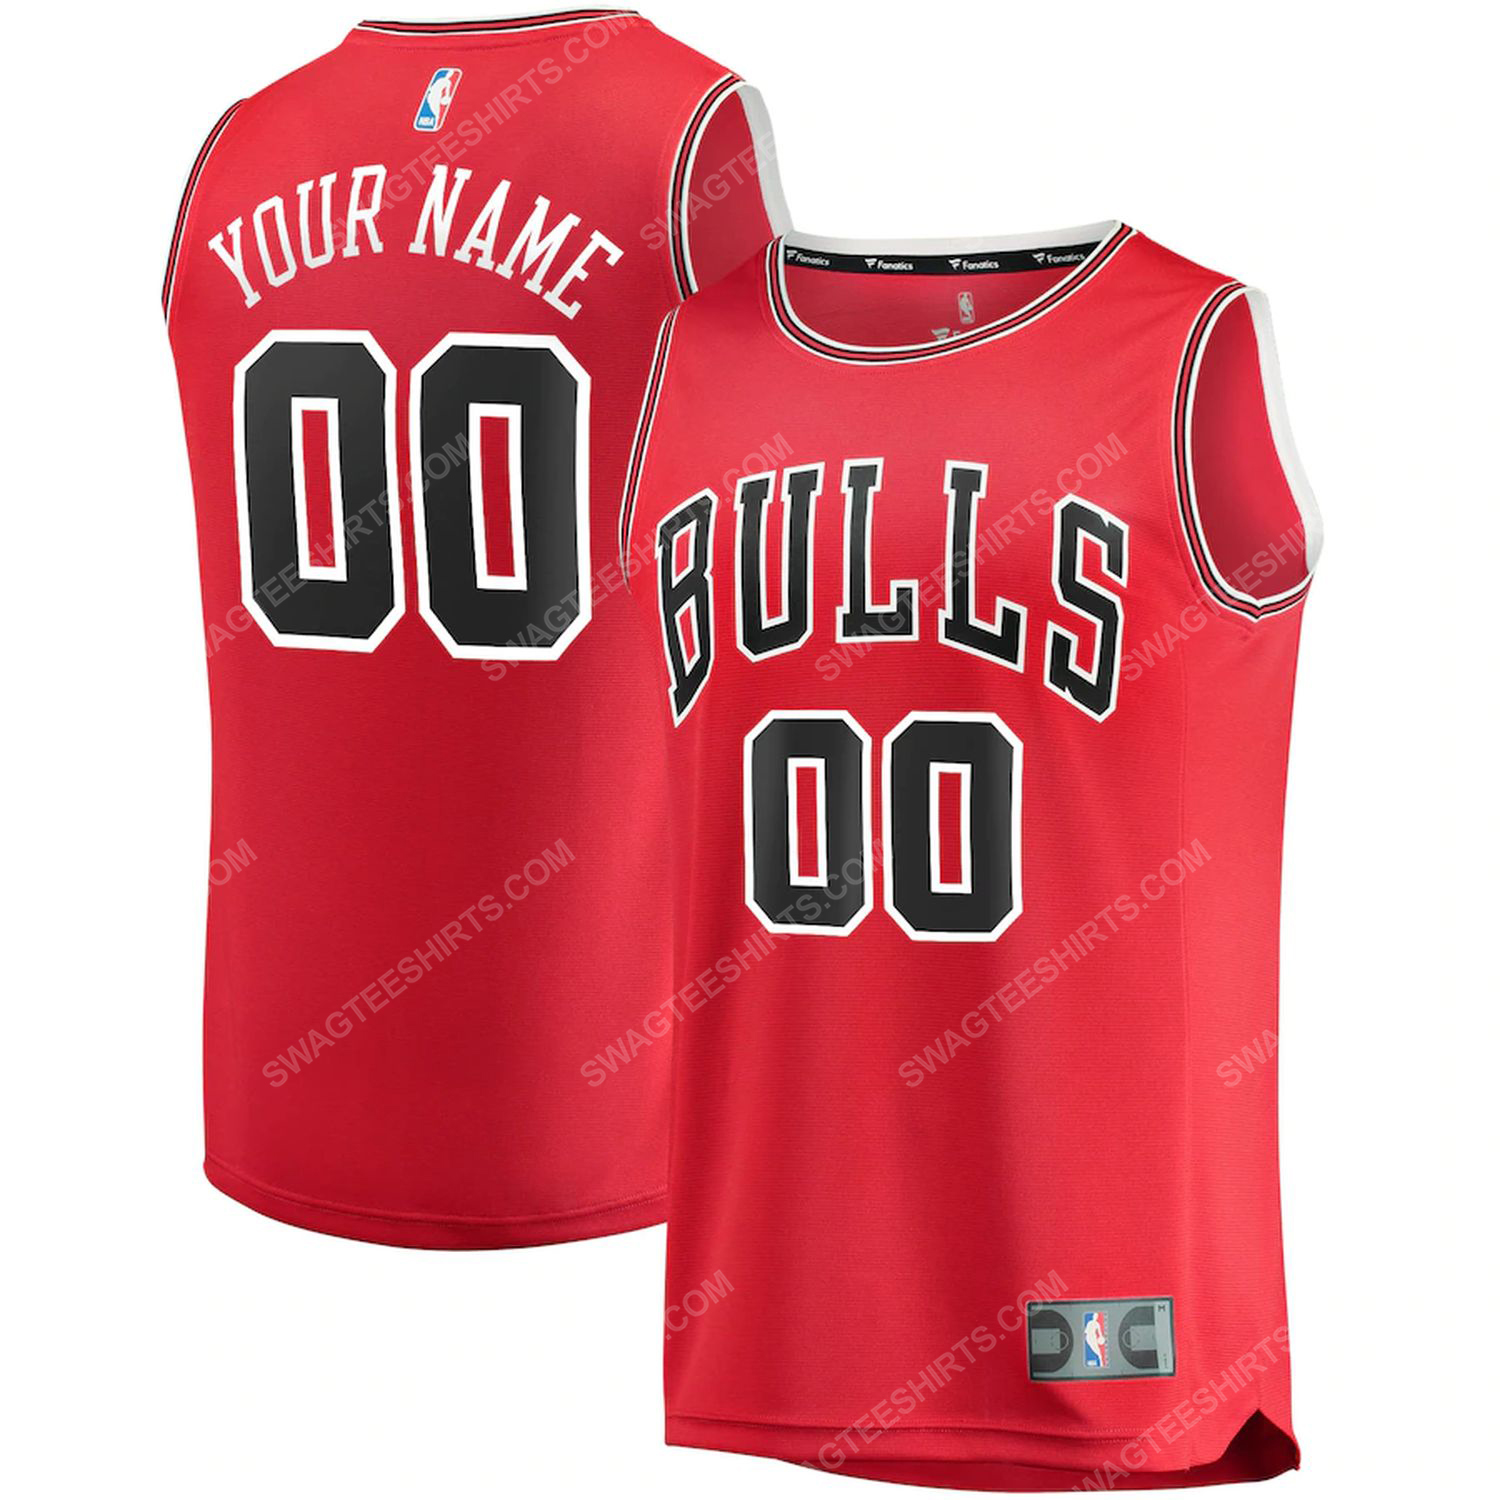 Custom name chicago bulls nba full print basketball jersey - red - Copy